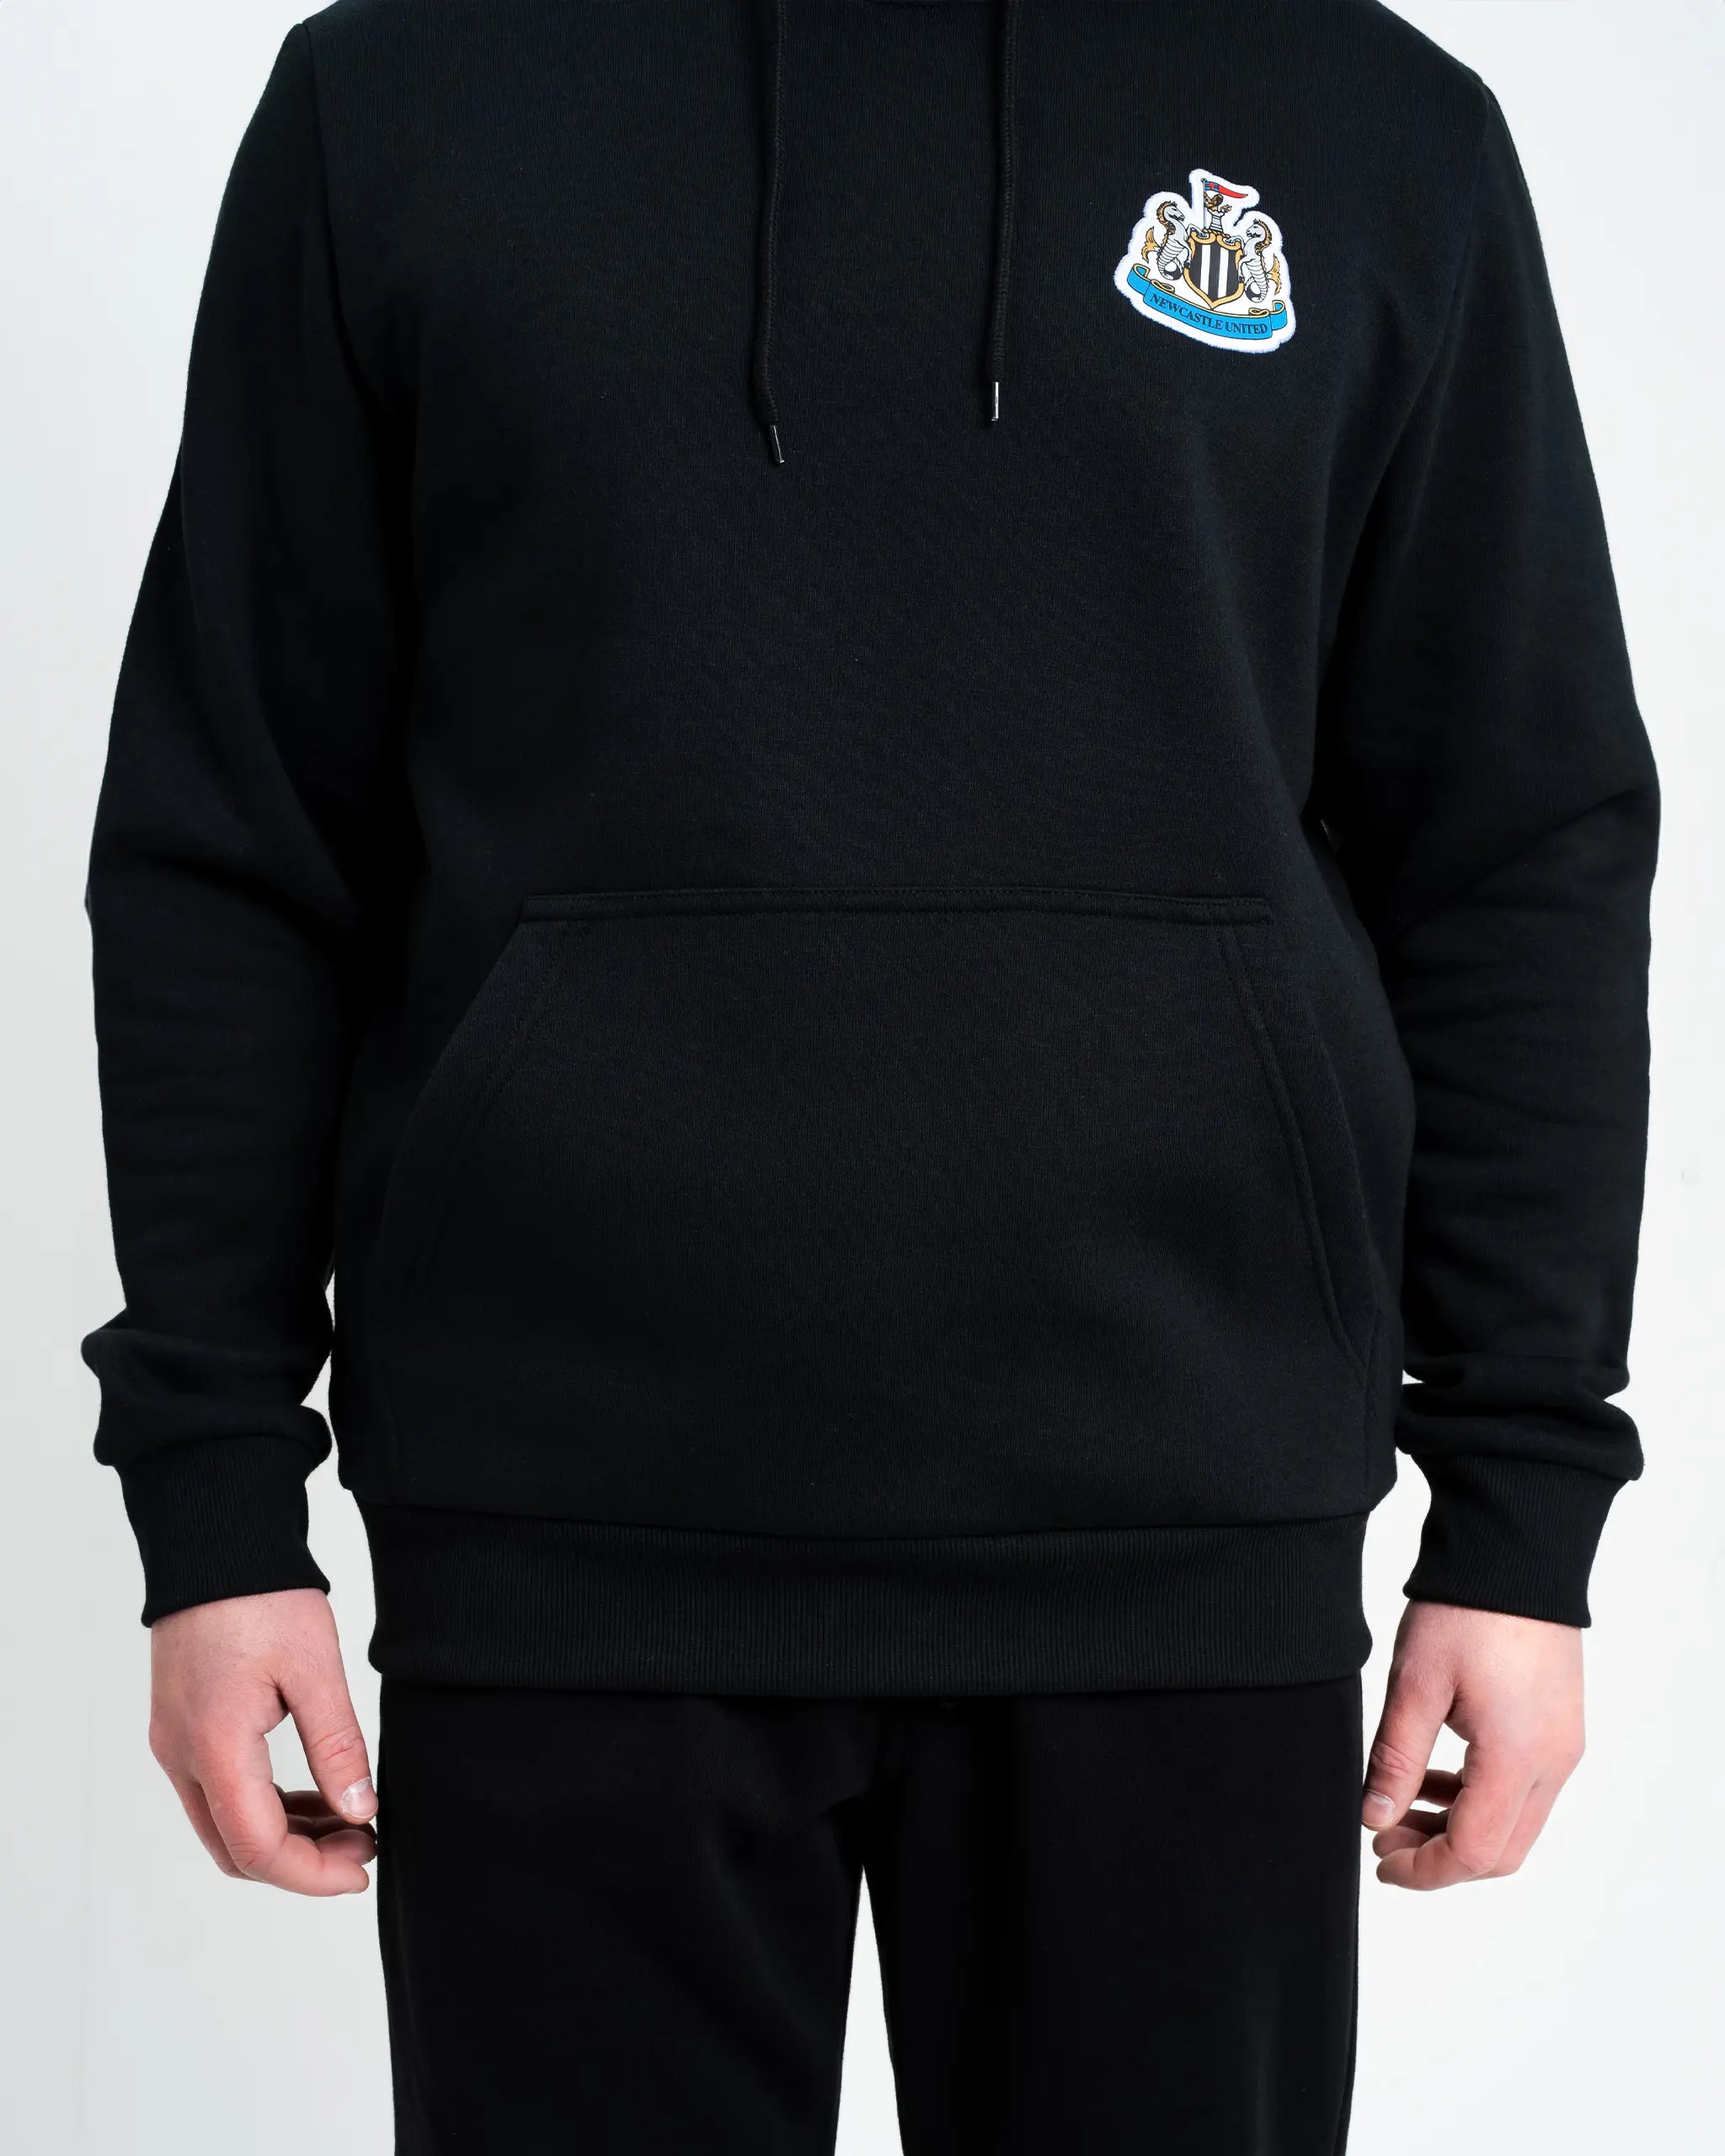 Newcastle United Men's Black Terrace Crest Hoodie